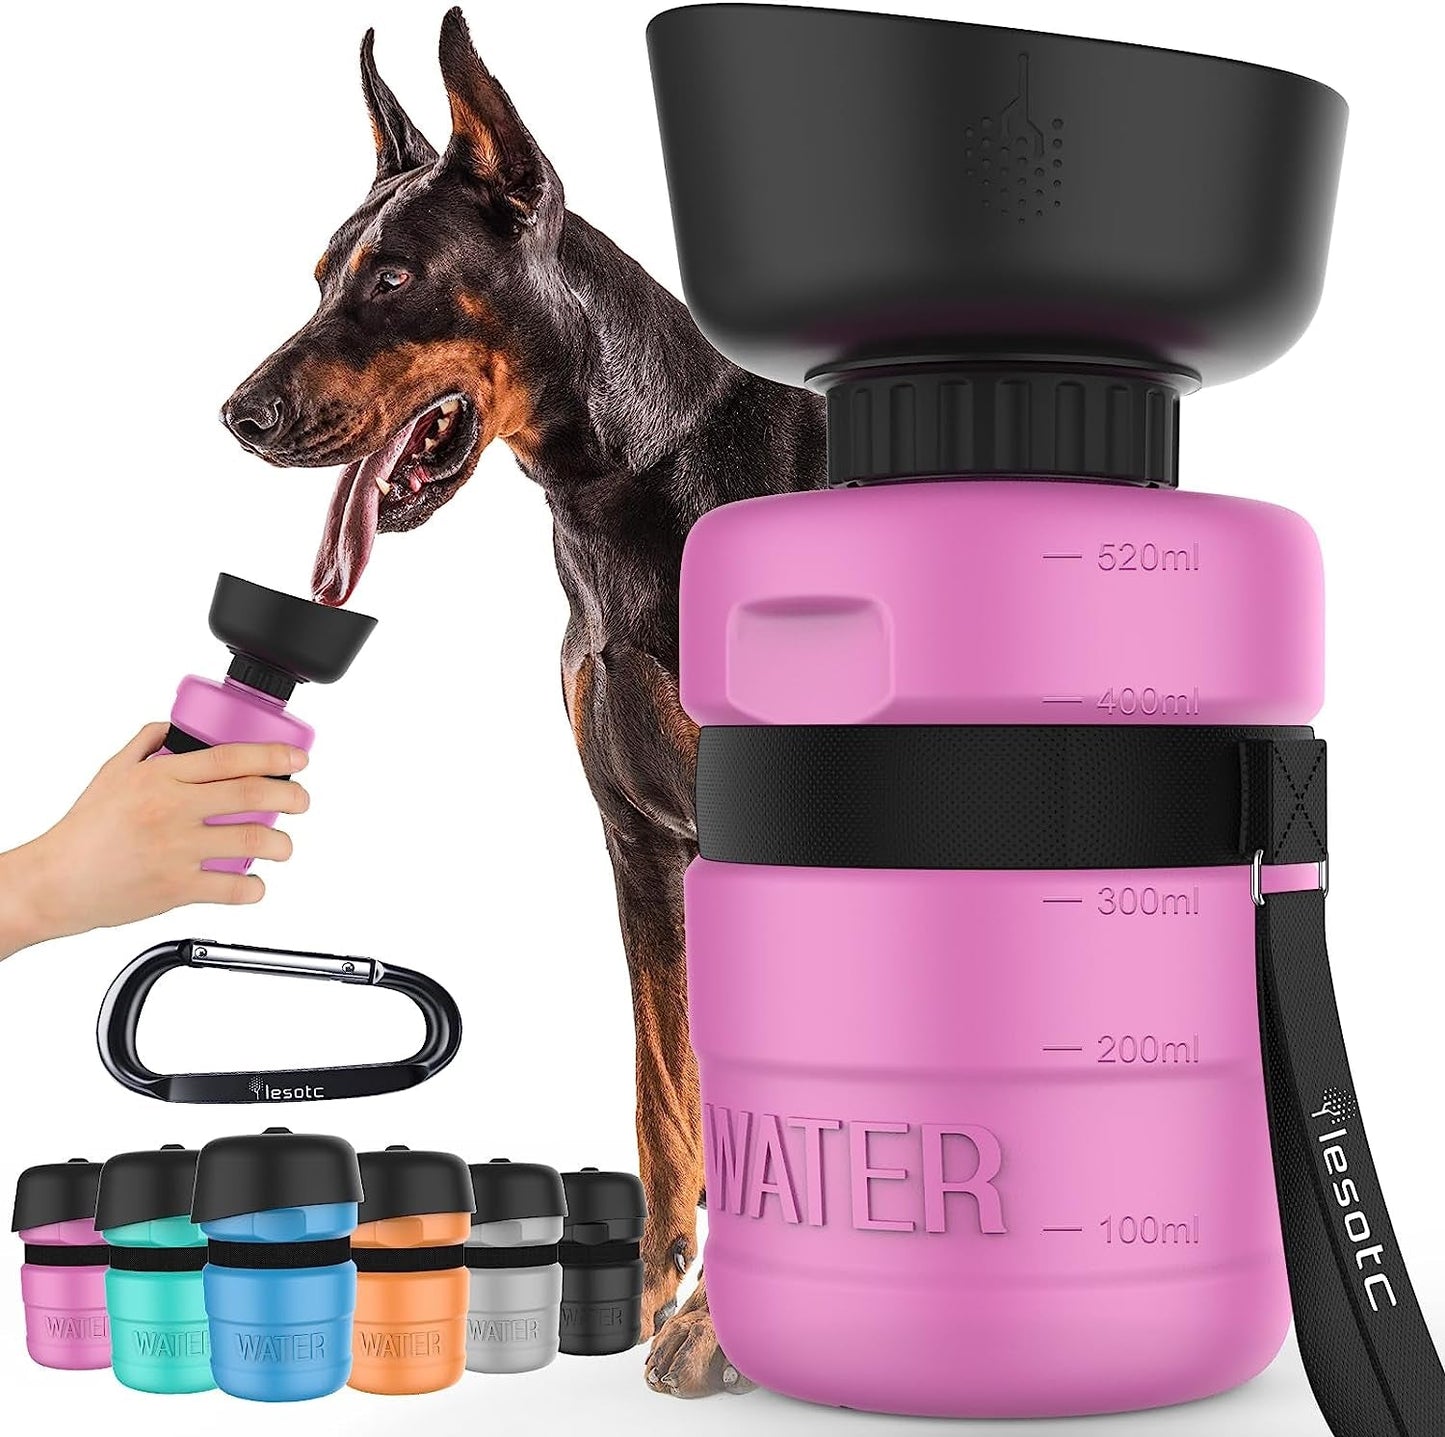 Upgraded Dog Water Bottle Foldable,Portable Dog Water Dispenser,Leak Proof Pet Water Bottle for Dogs,Dog Travel Water Bottle for Outdoor Walking,Hiking,Travel,Bpa Free,Lightweight - PETGS